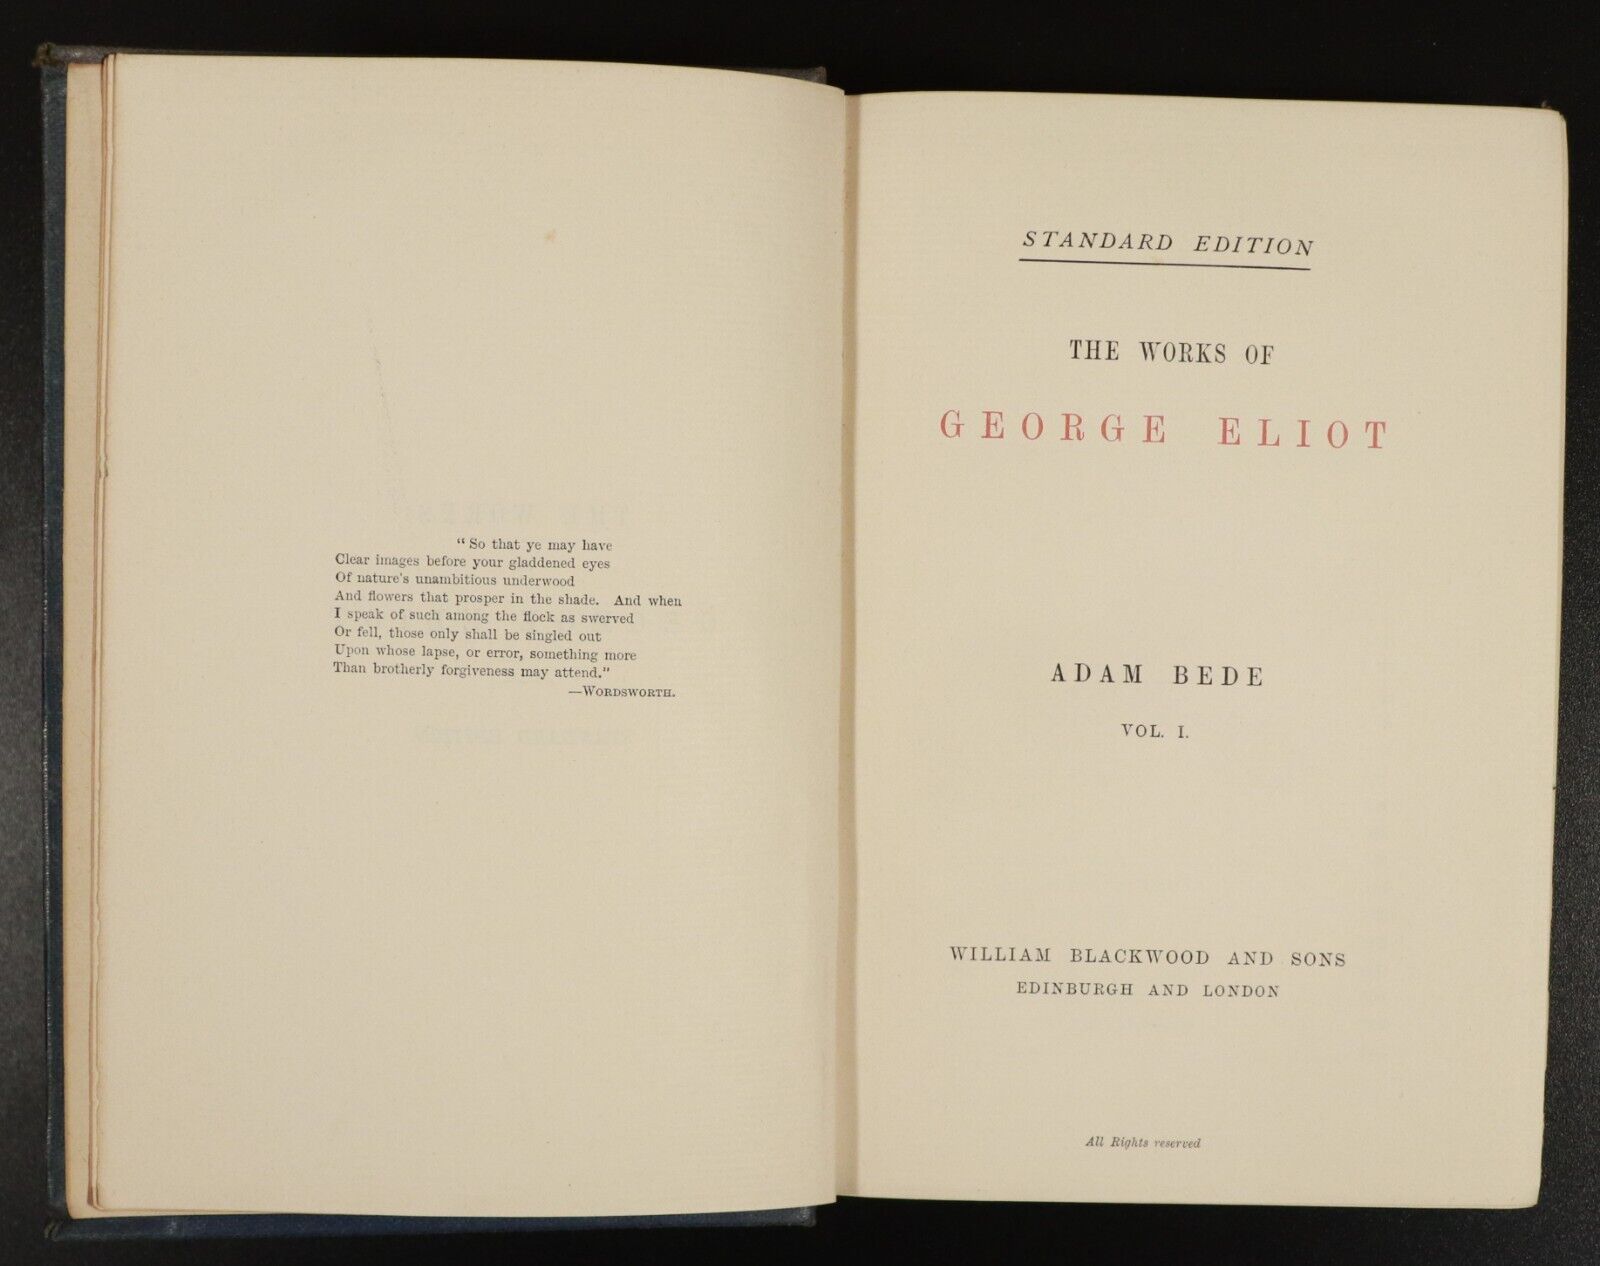 c1895 2vol Works Of George Eliot - Adam Bede Classic Literature Fiction Book Set - 0